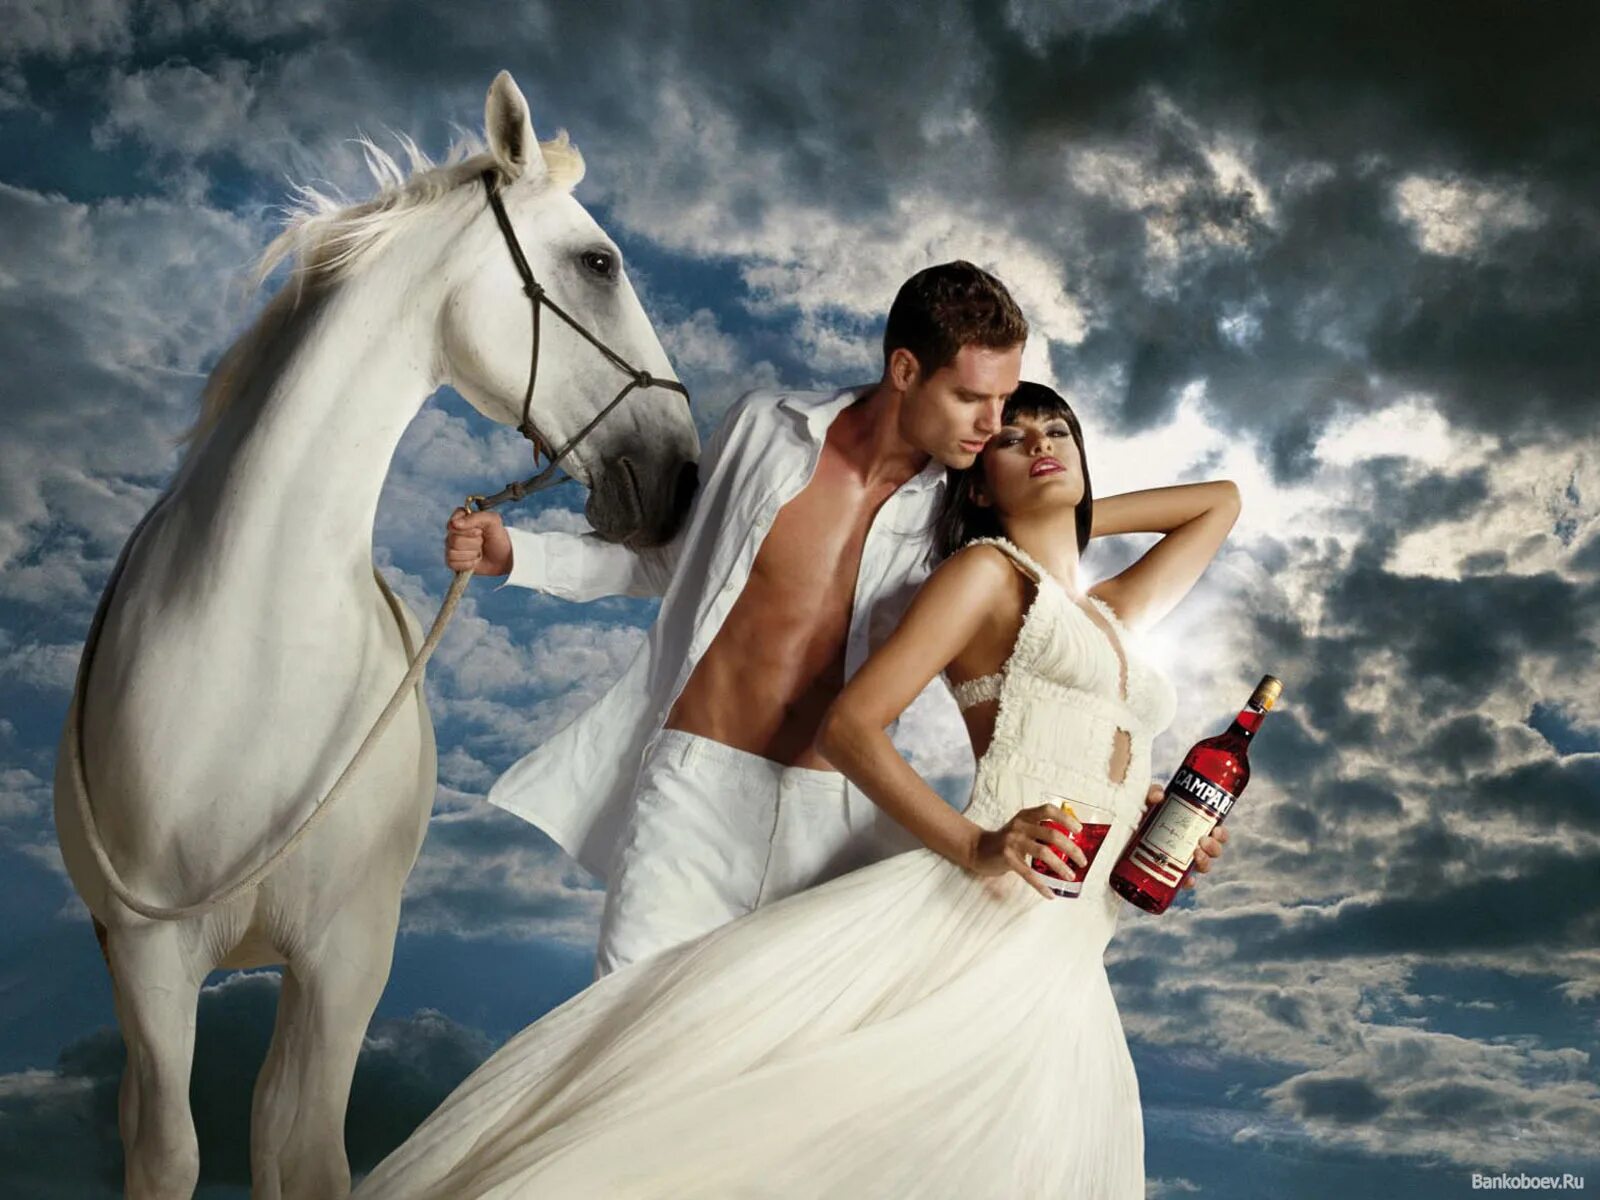 Мужчина и женщина на коне. Фотосессия с лошадьми. Принц на белом коне.